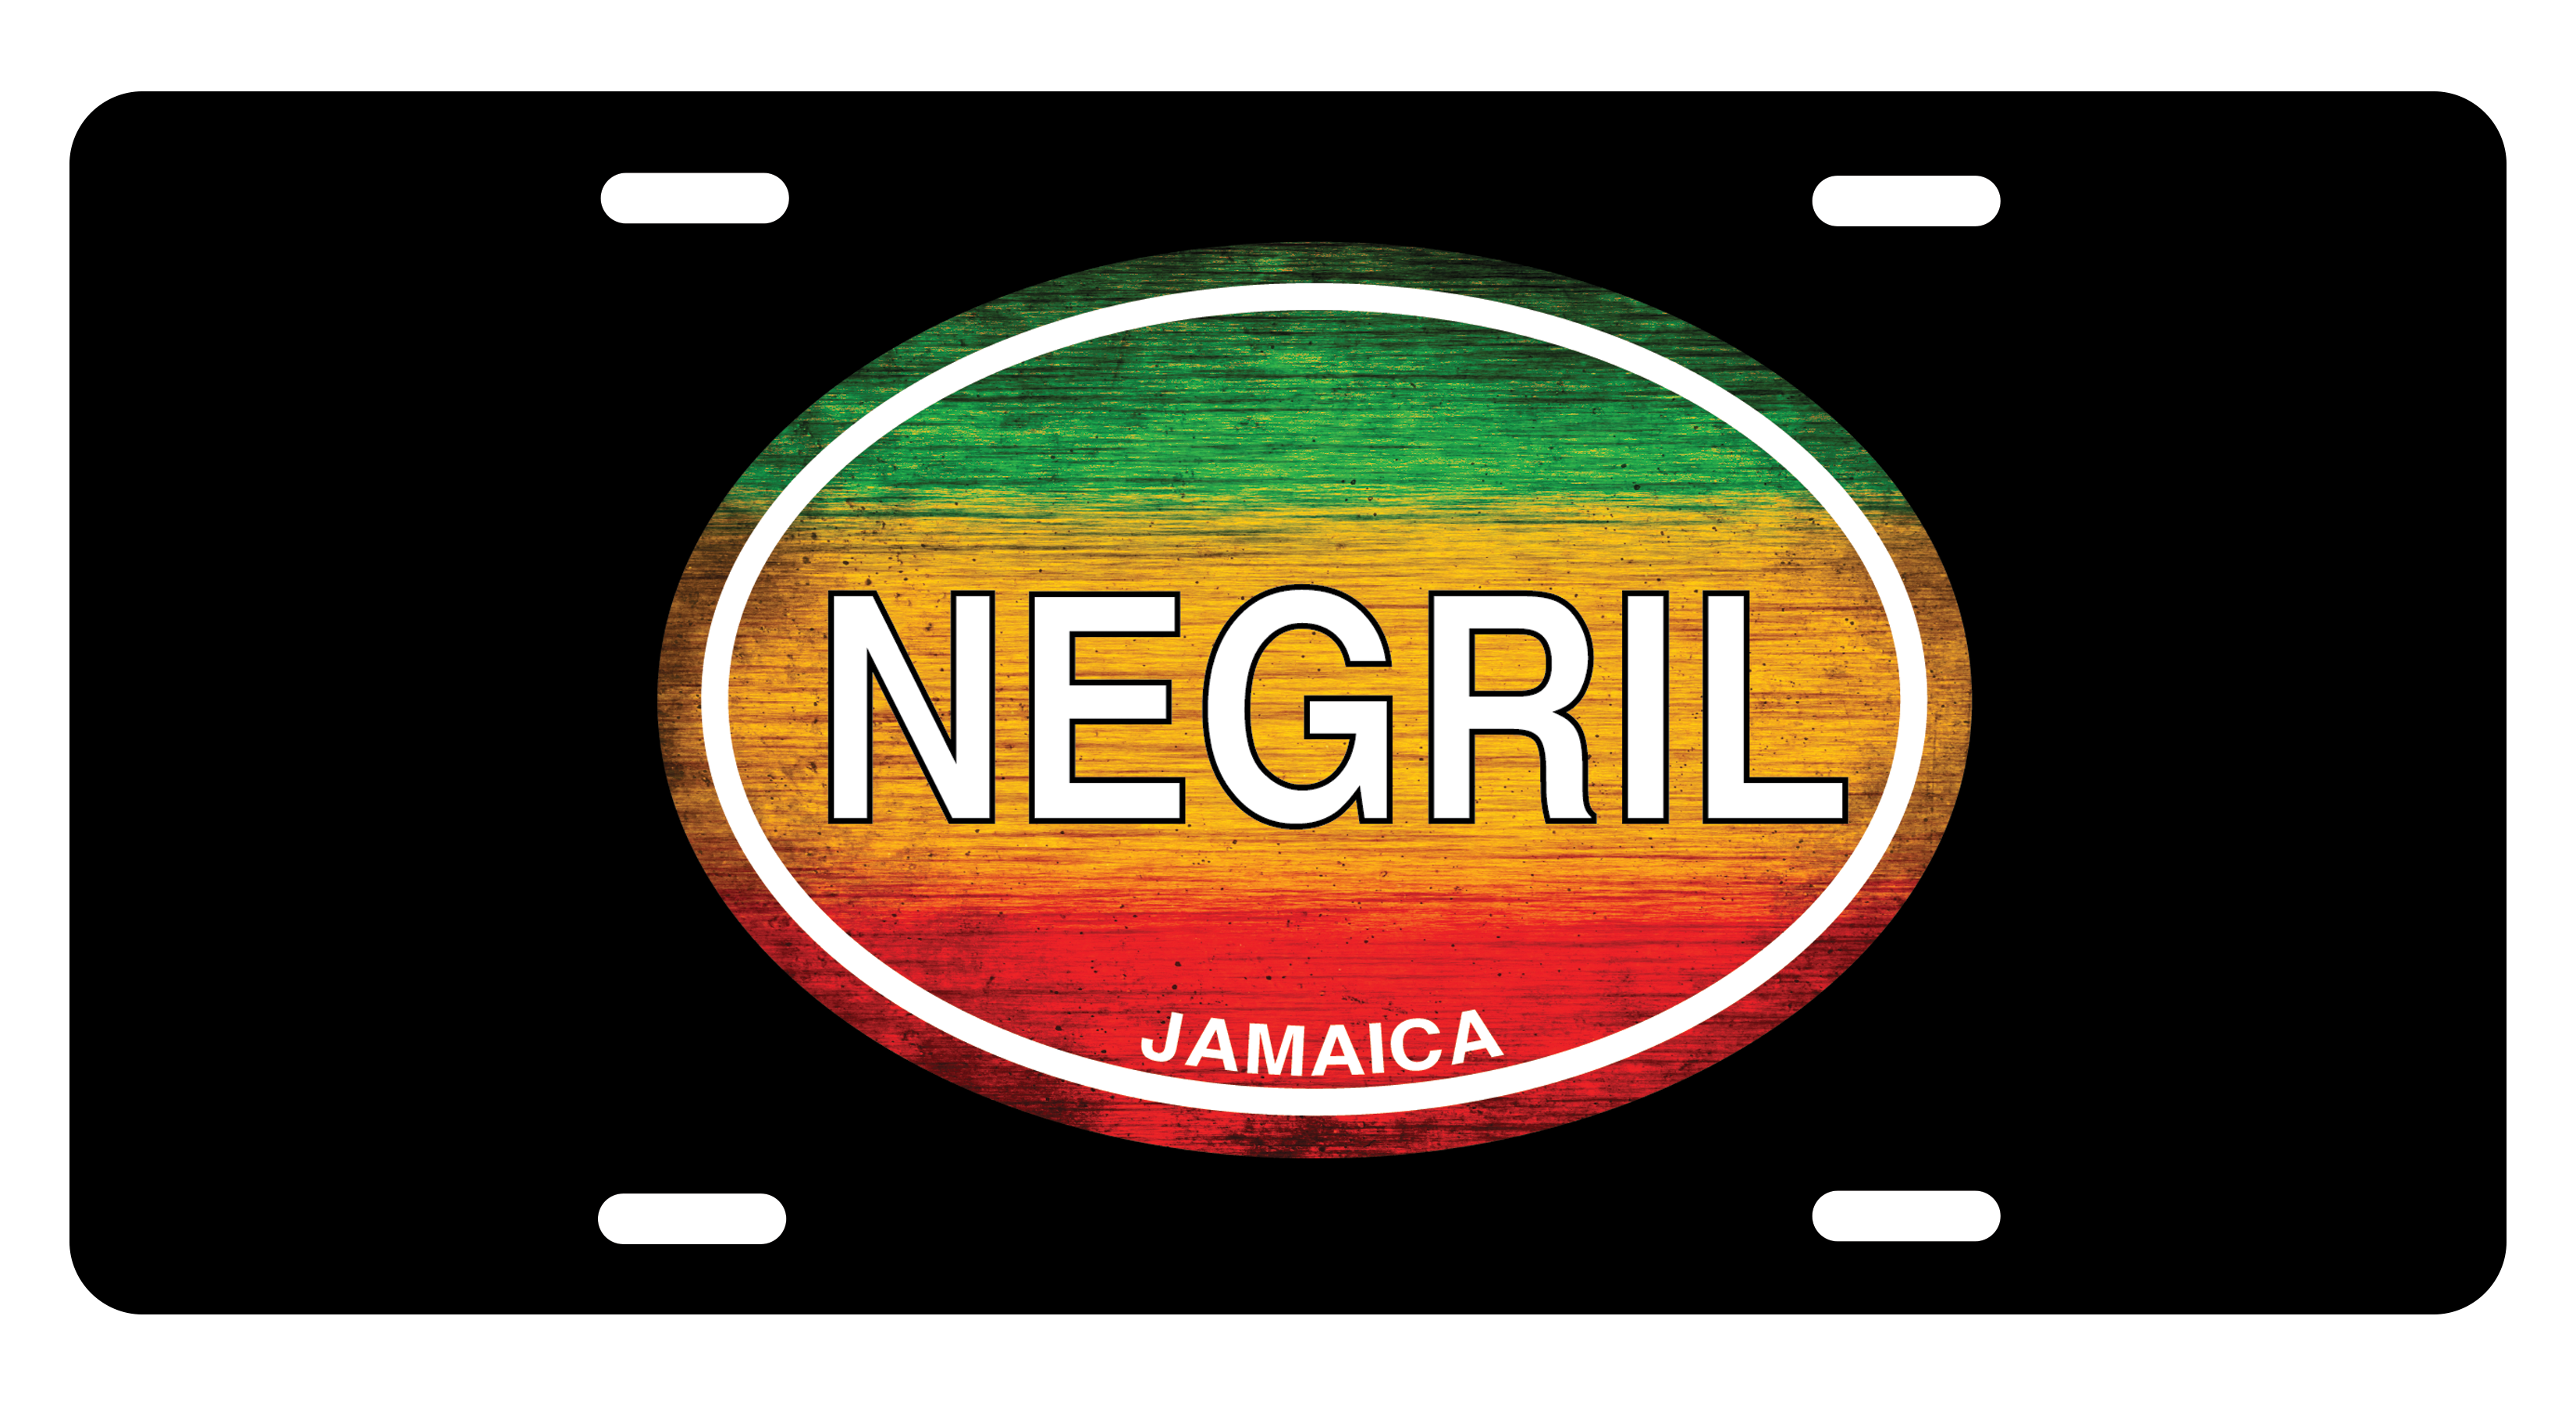 Negril Rasta Logo License Plates - My Destination Location